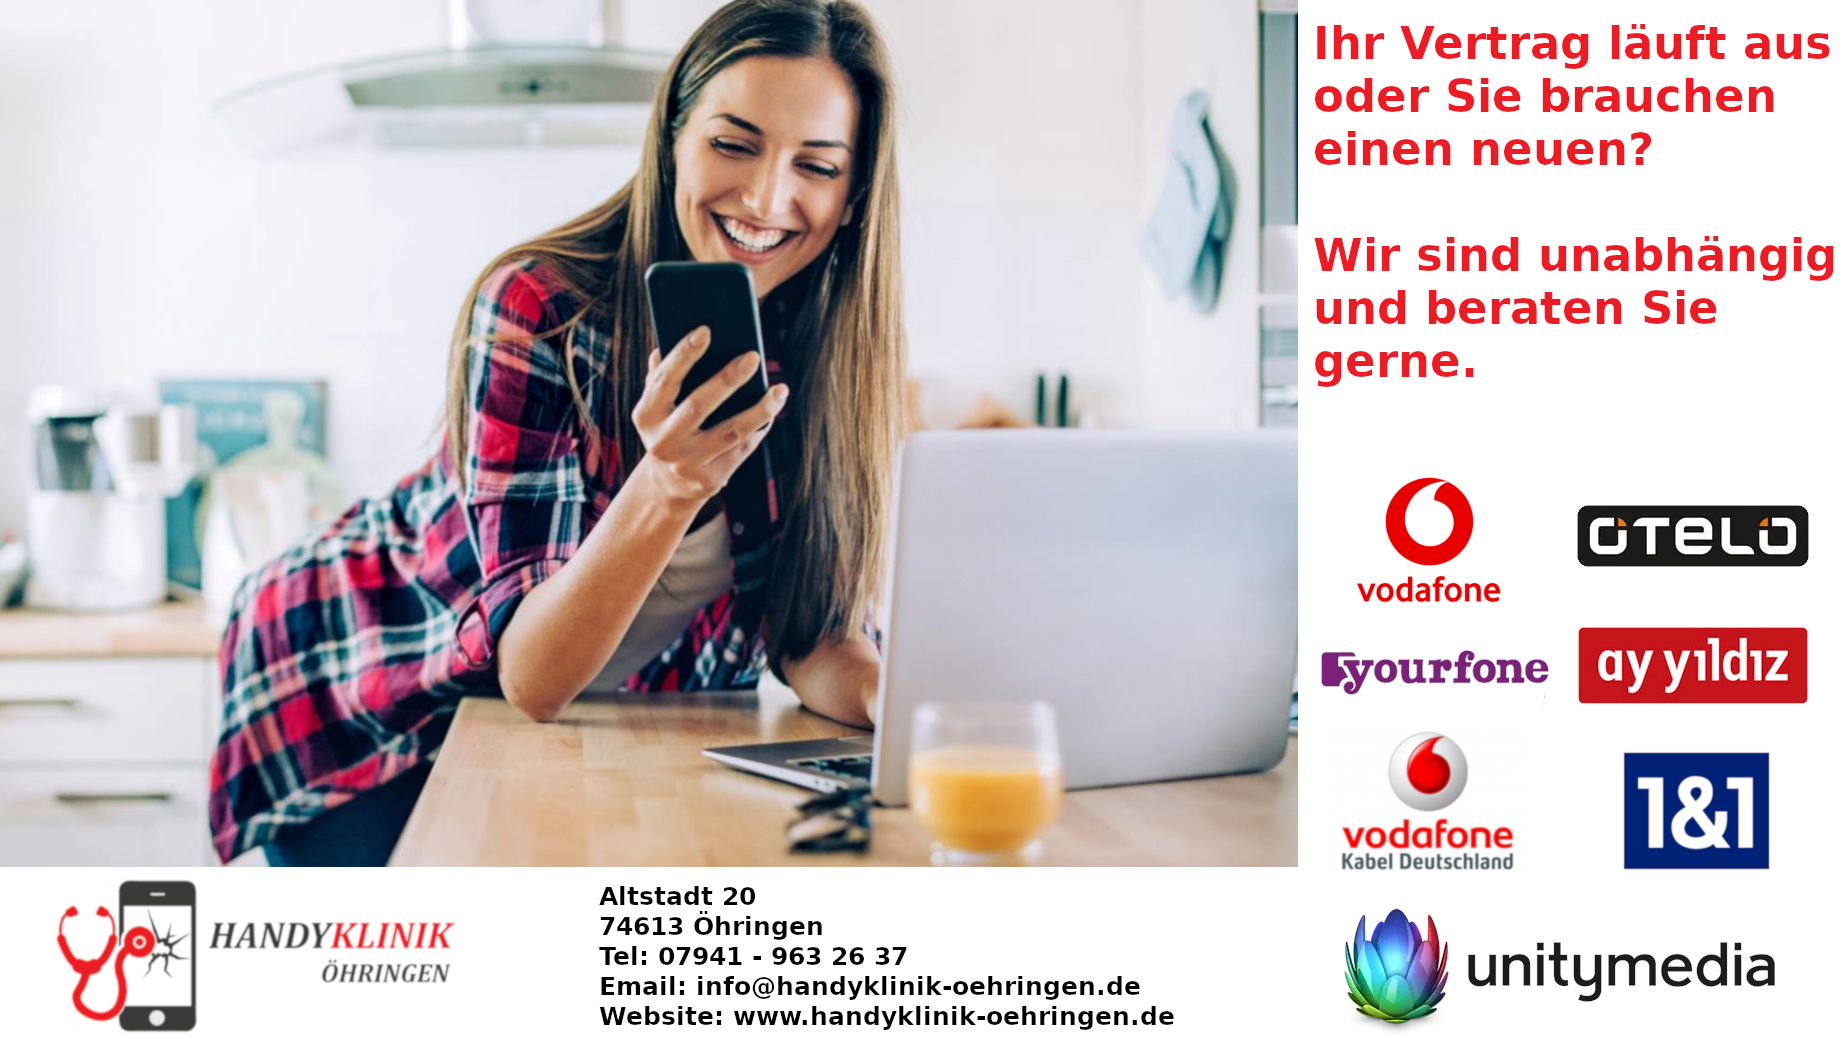 Handyklinik Öhringen / Handyreparatur / o2 Shop / Vodafone Shop / Unitymedia Shop / EnBW Öhringen